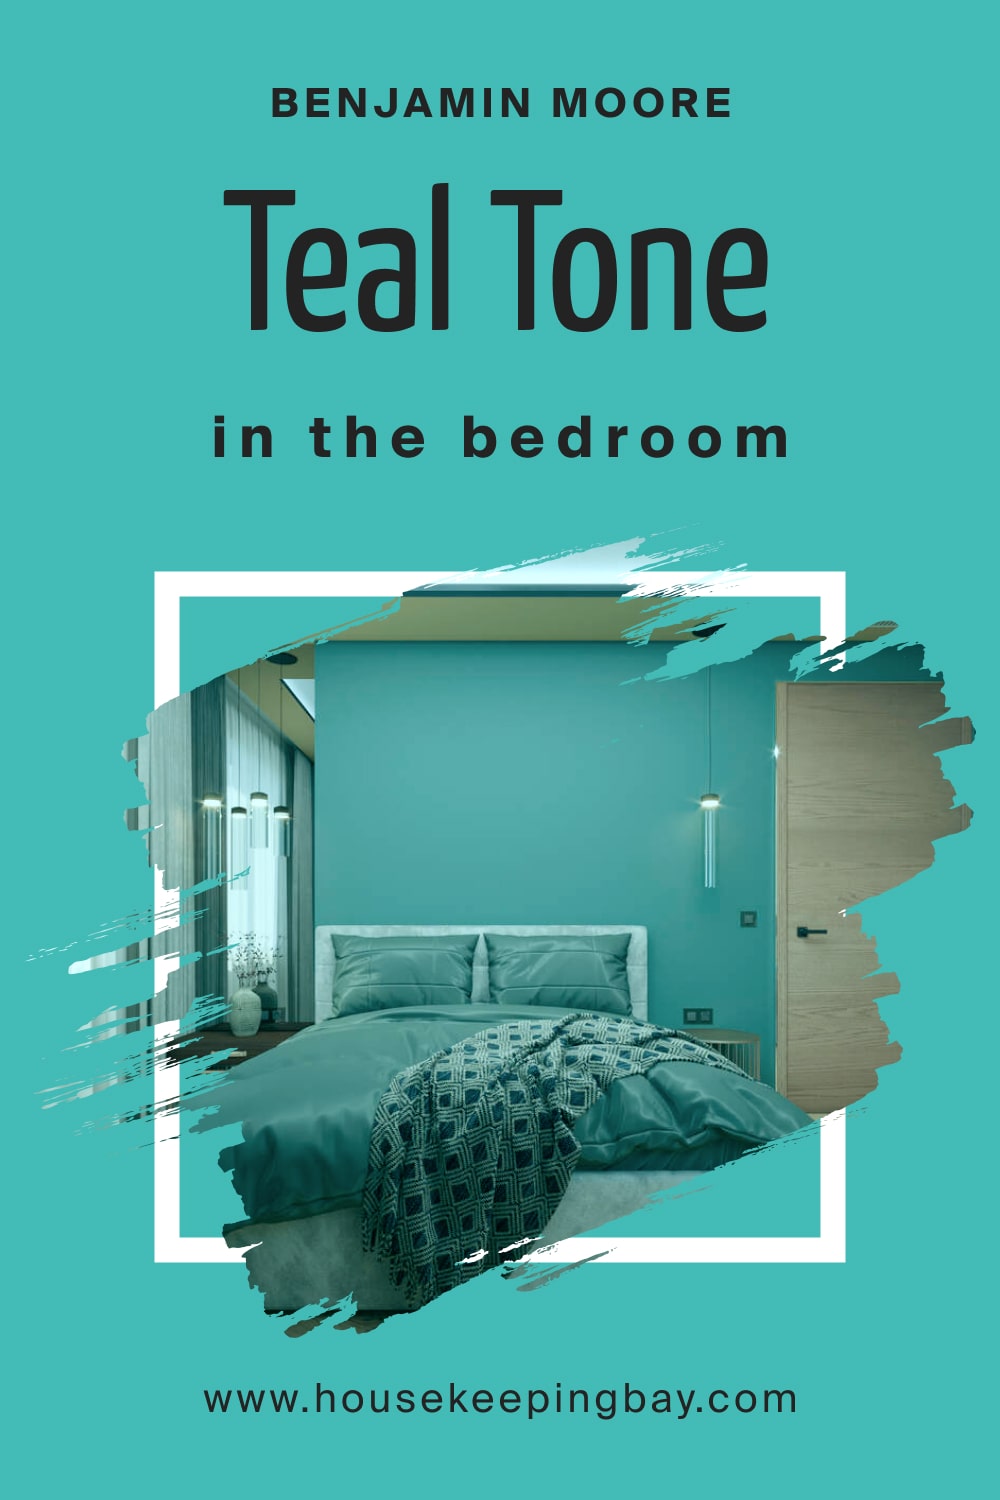 Benjamin Moore. BM Teal Tone 663 for the Bedroom